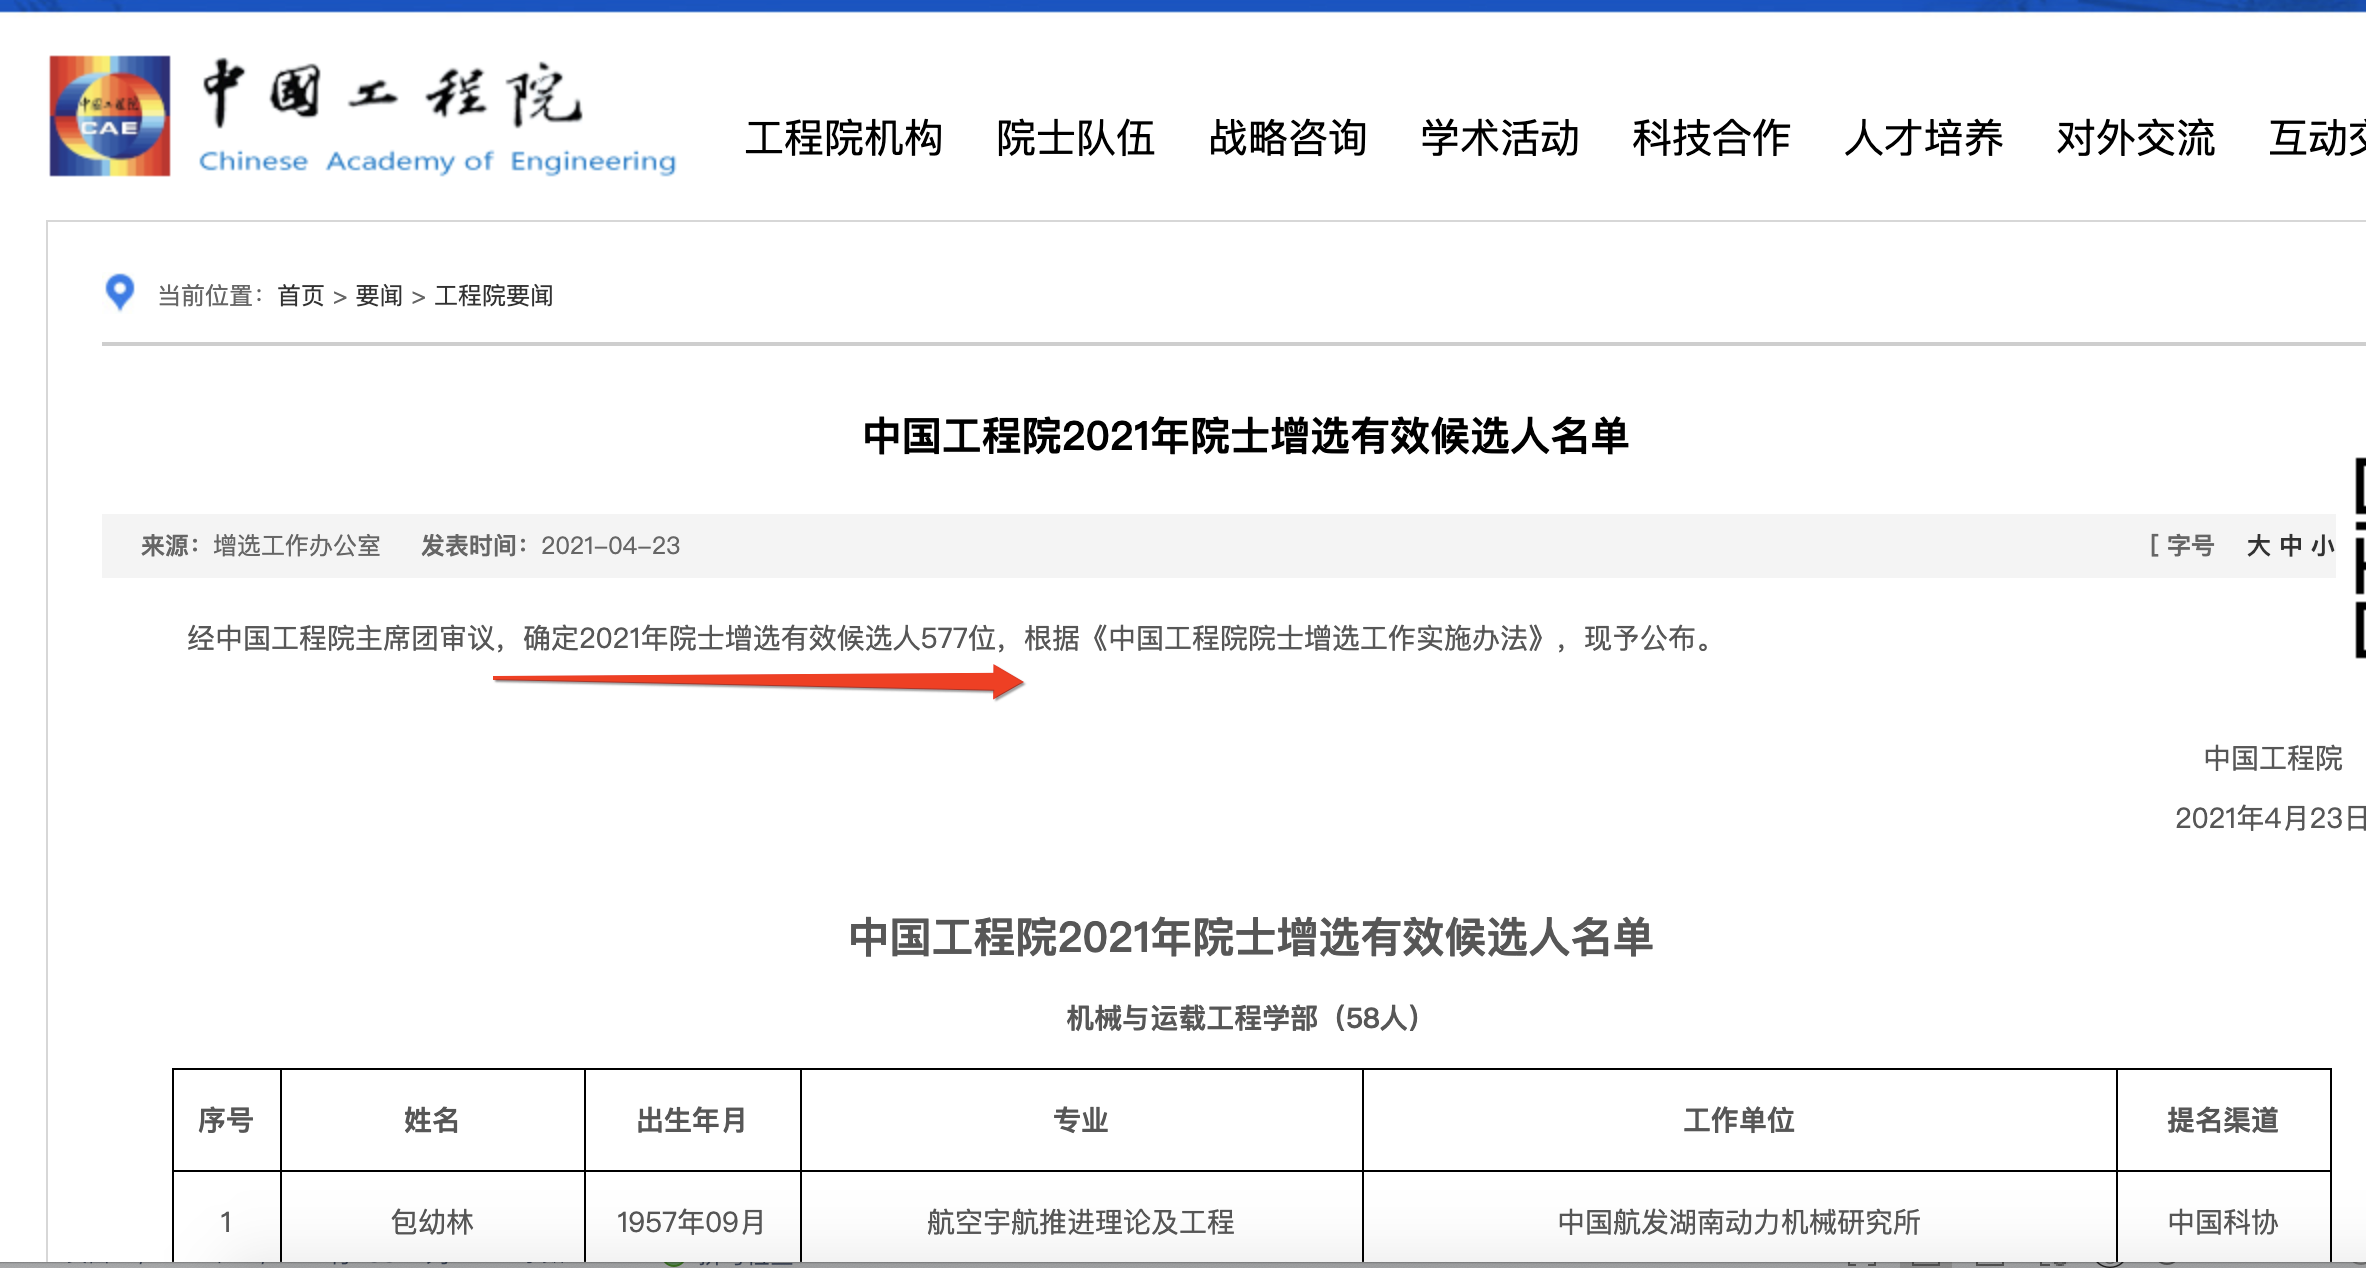 <font color="red">中国</font>工程院2021年院士增选577位有效候选人名单公布，其中医药卫生部84位有效候选人